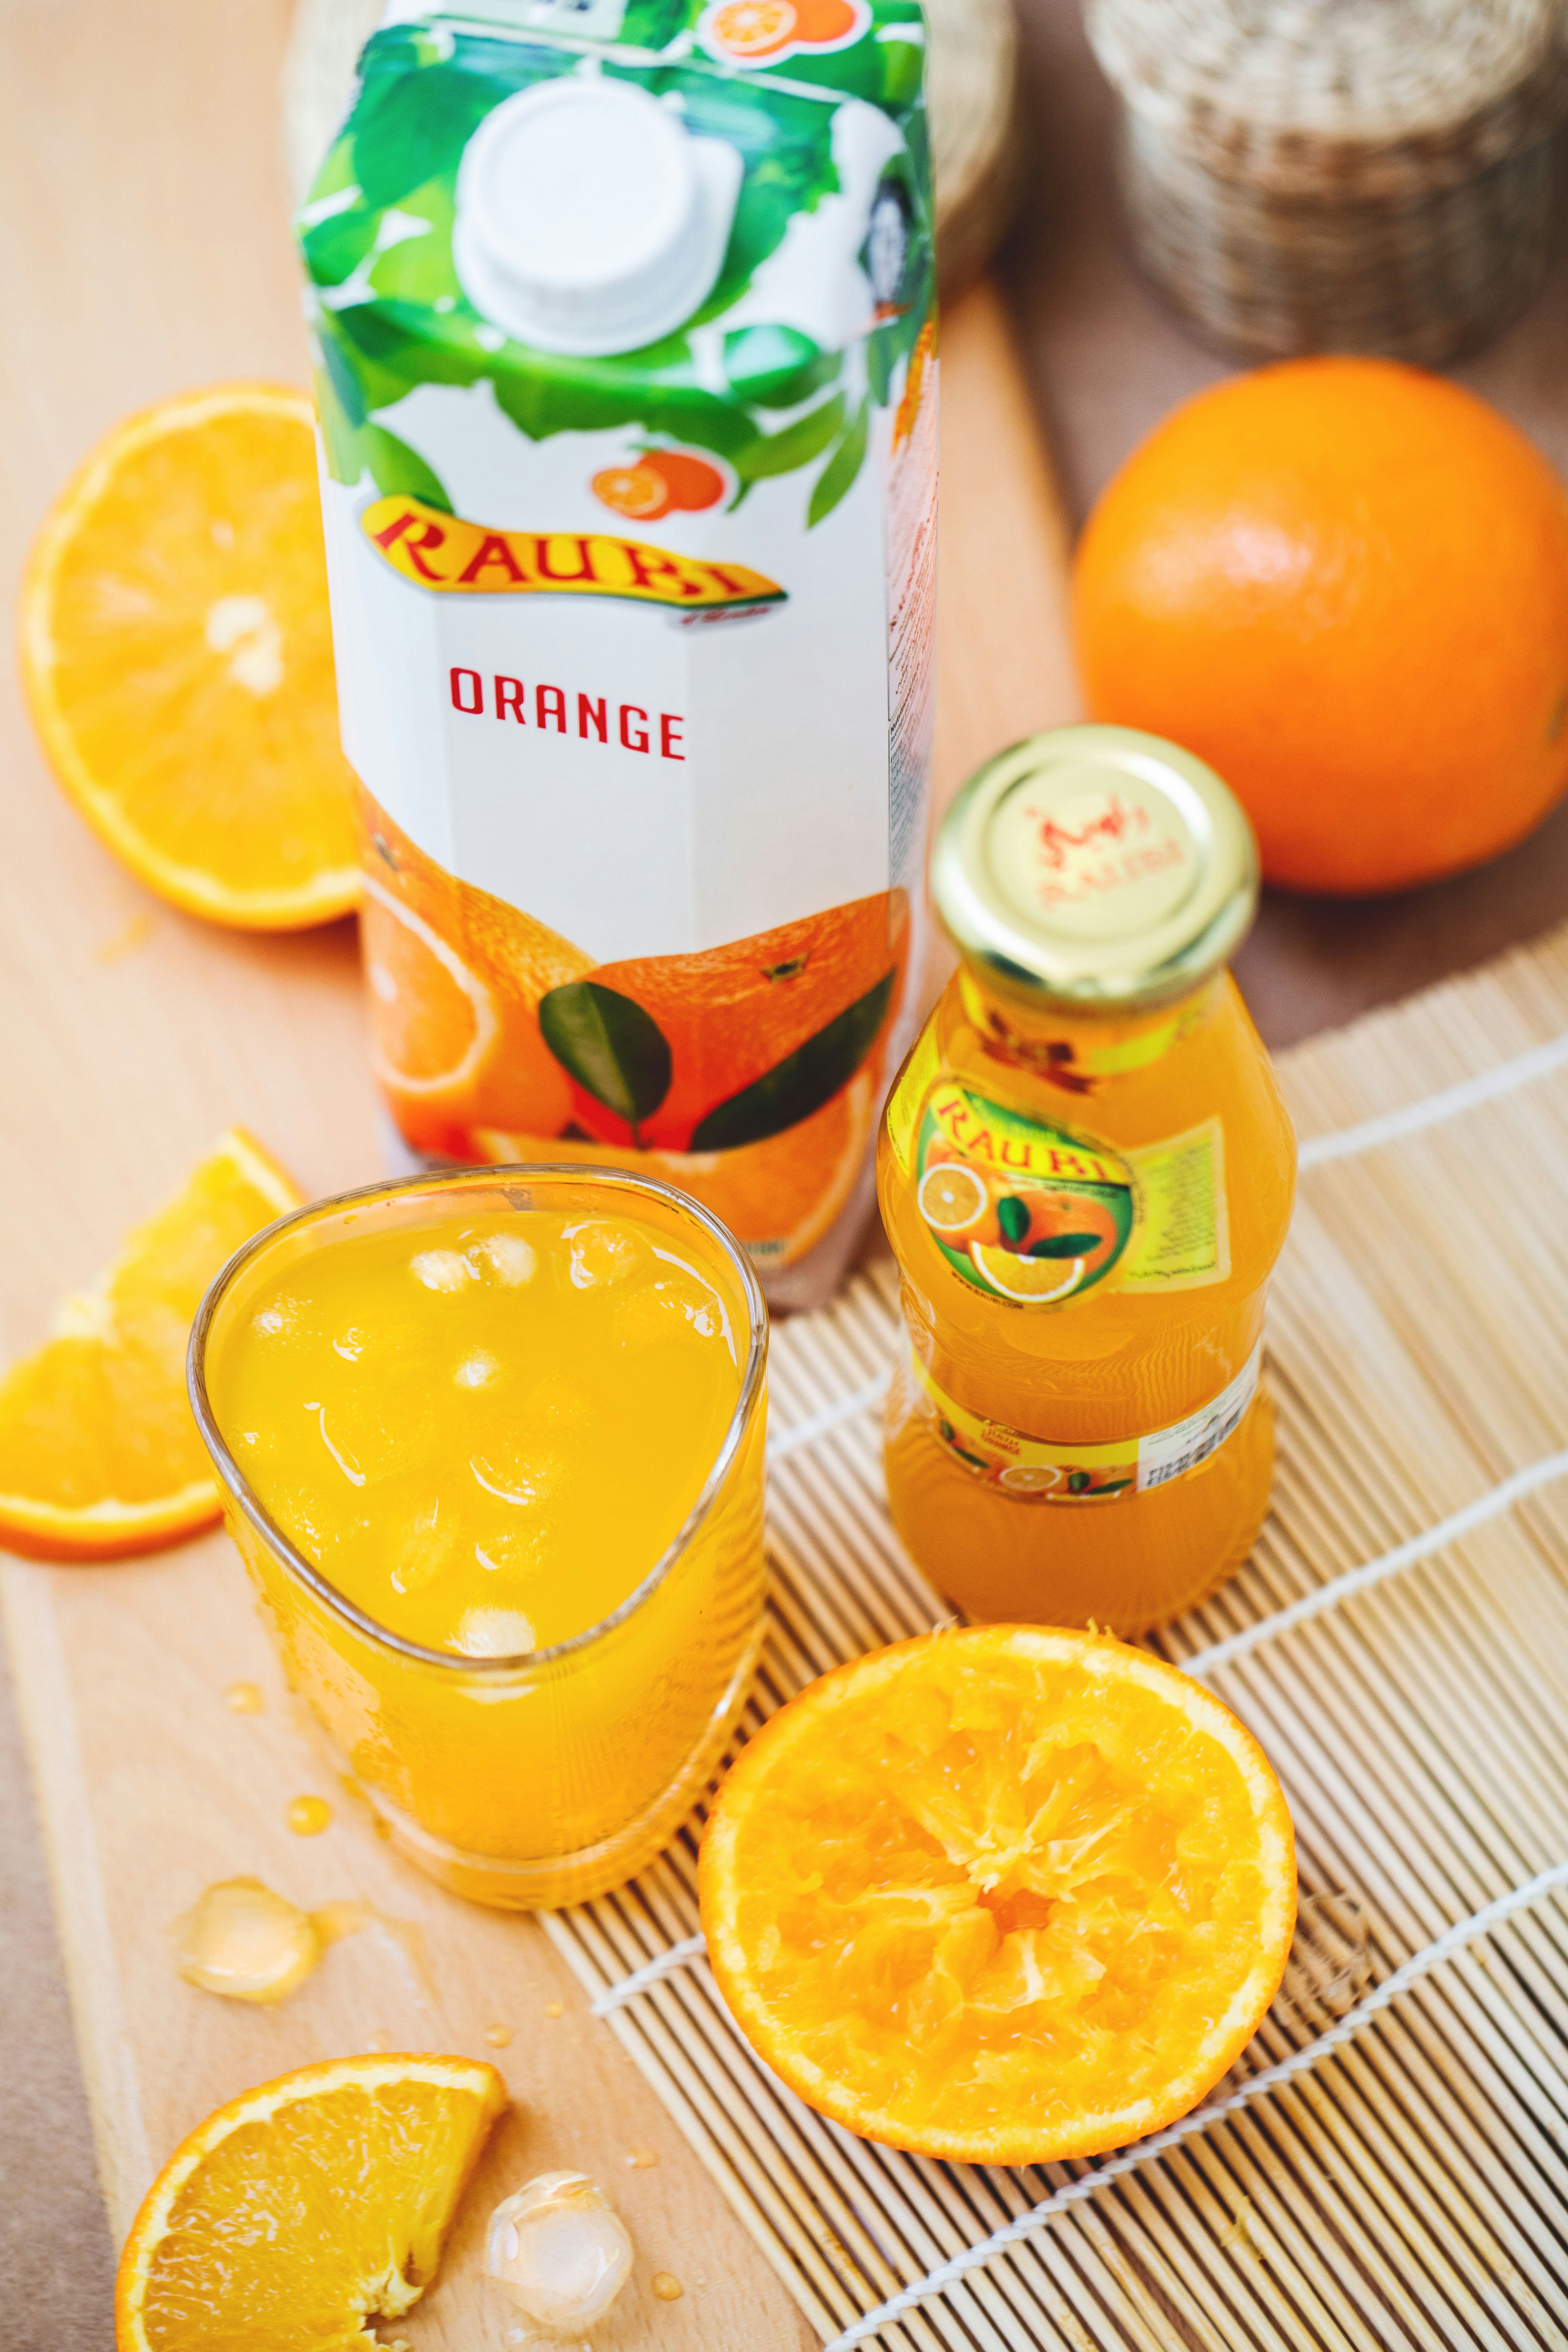 orange juice in glass beside container